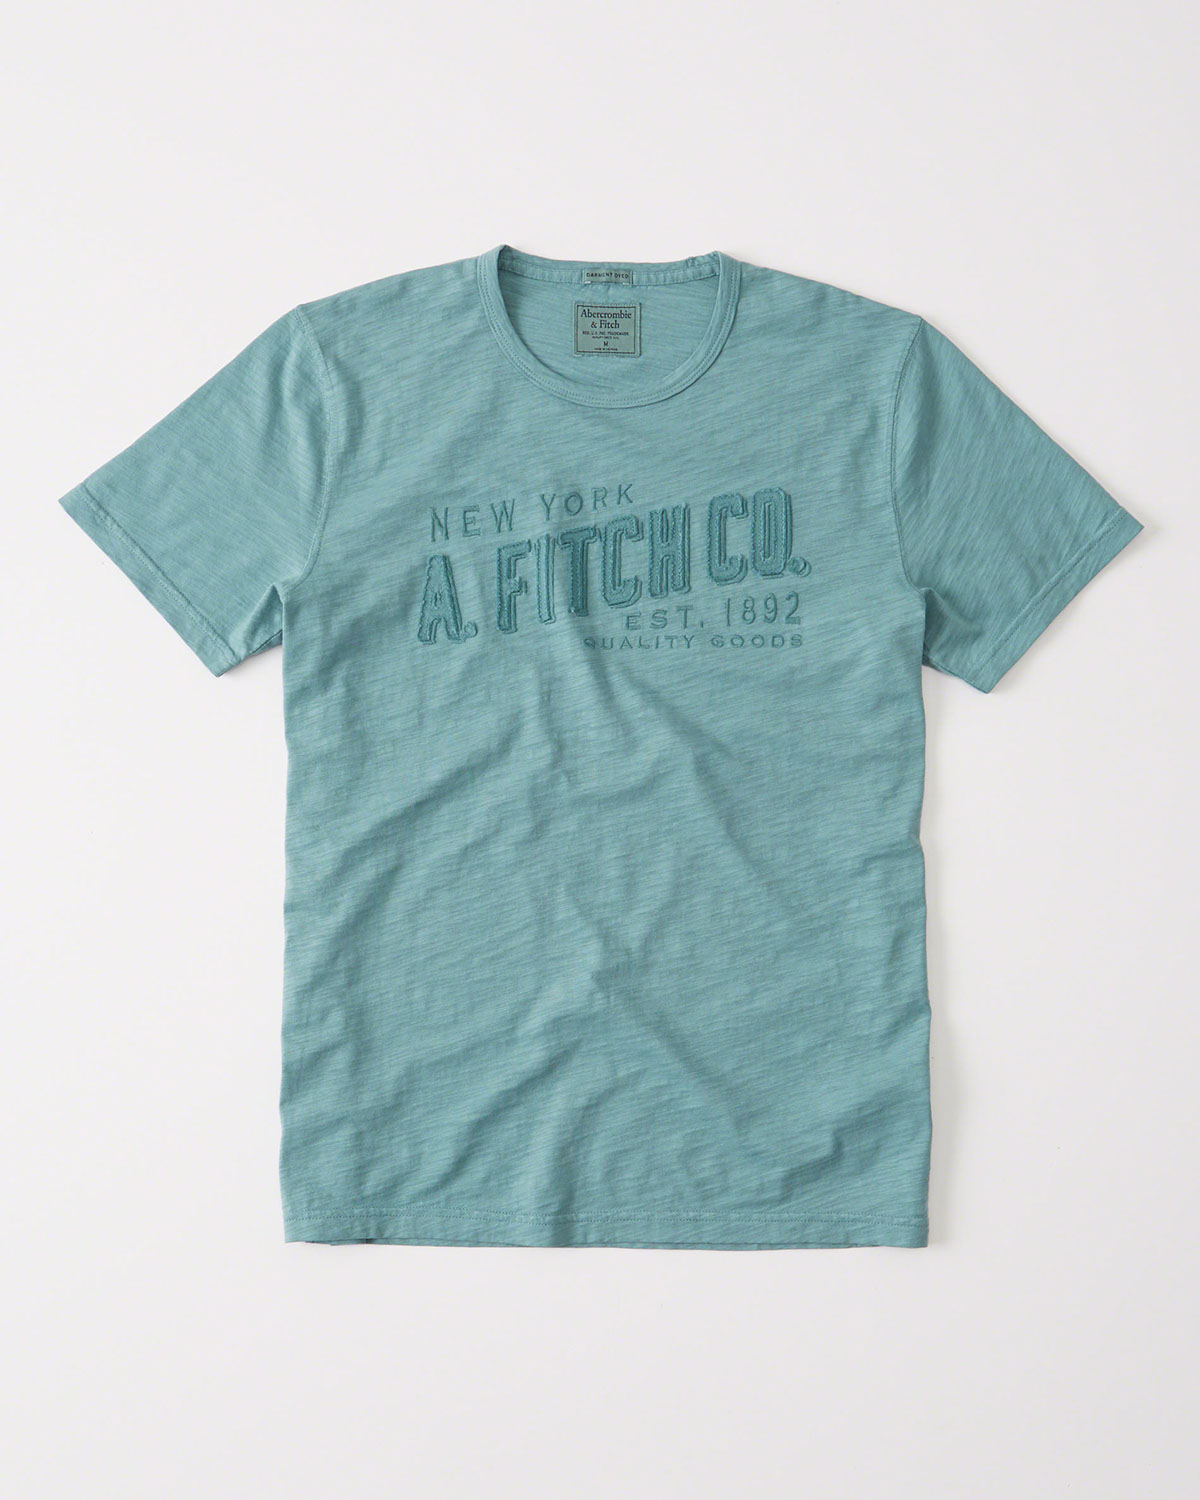 abercrombie Abercrombie & Fitch t-shirt graphic desing ILLUSTRATION  design